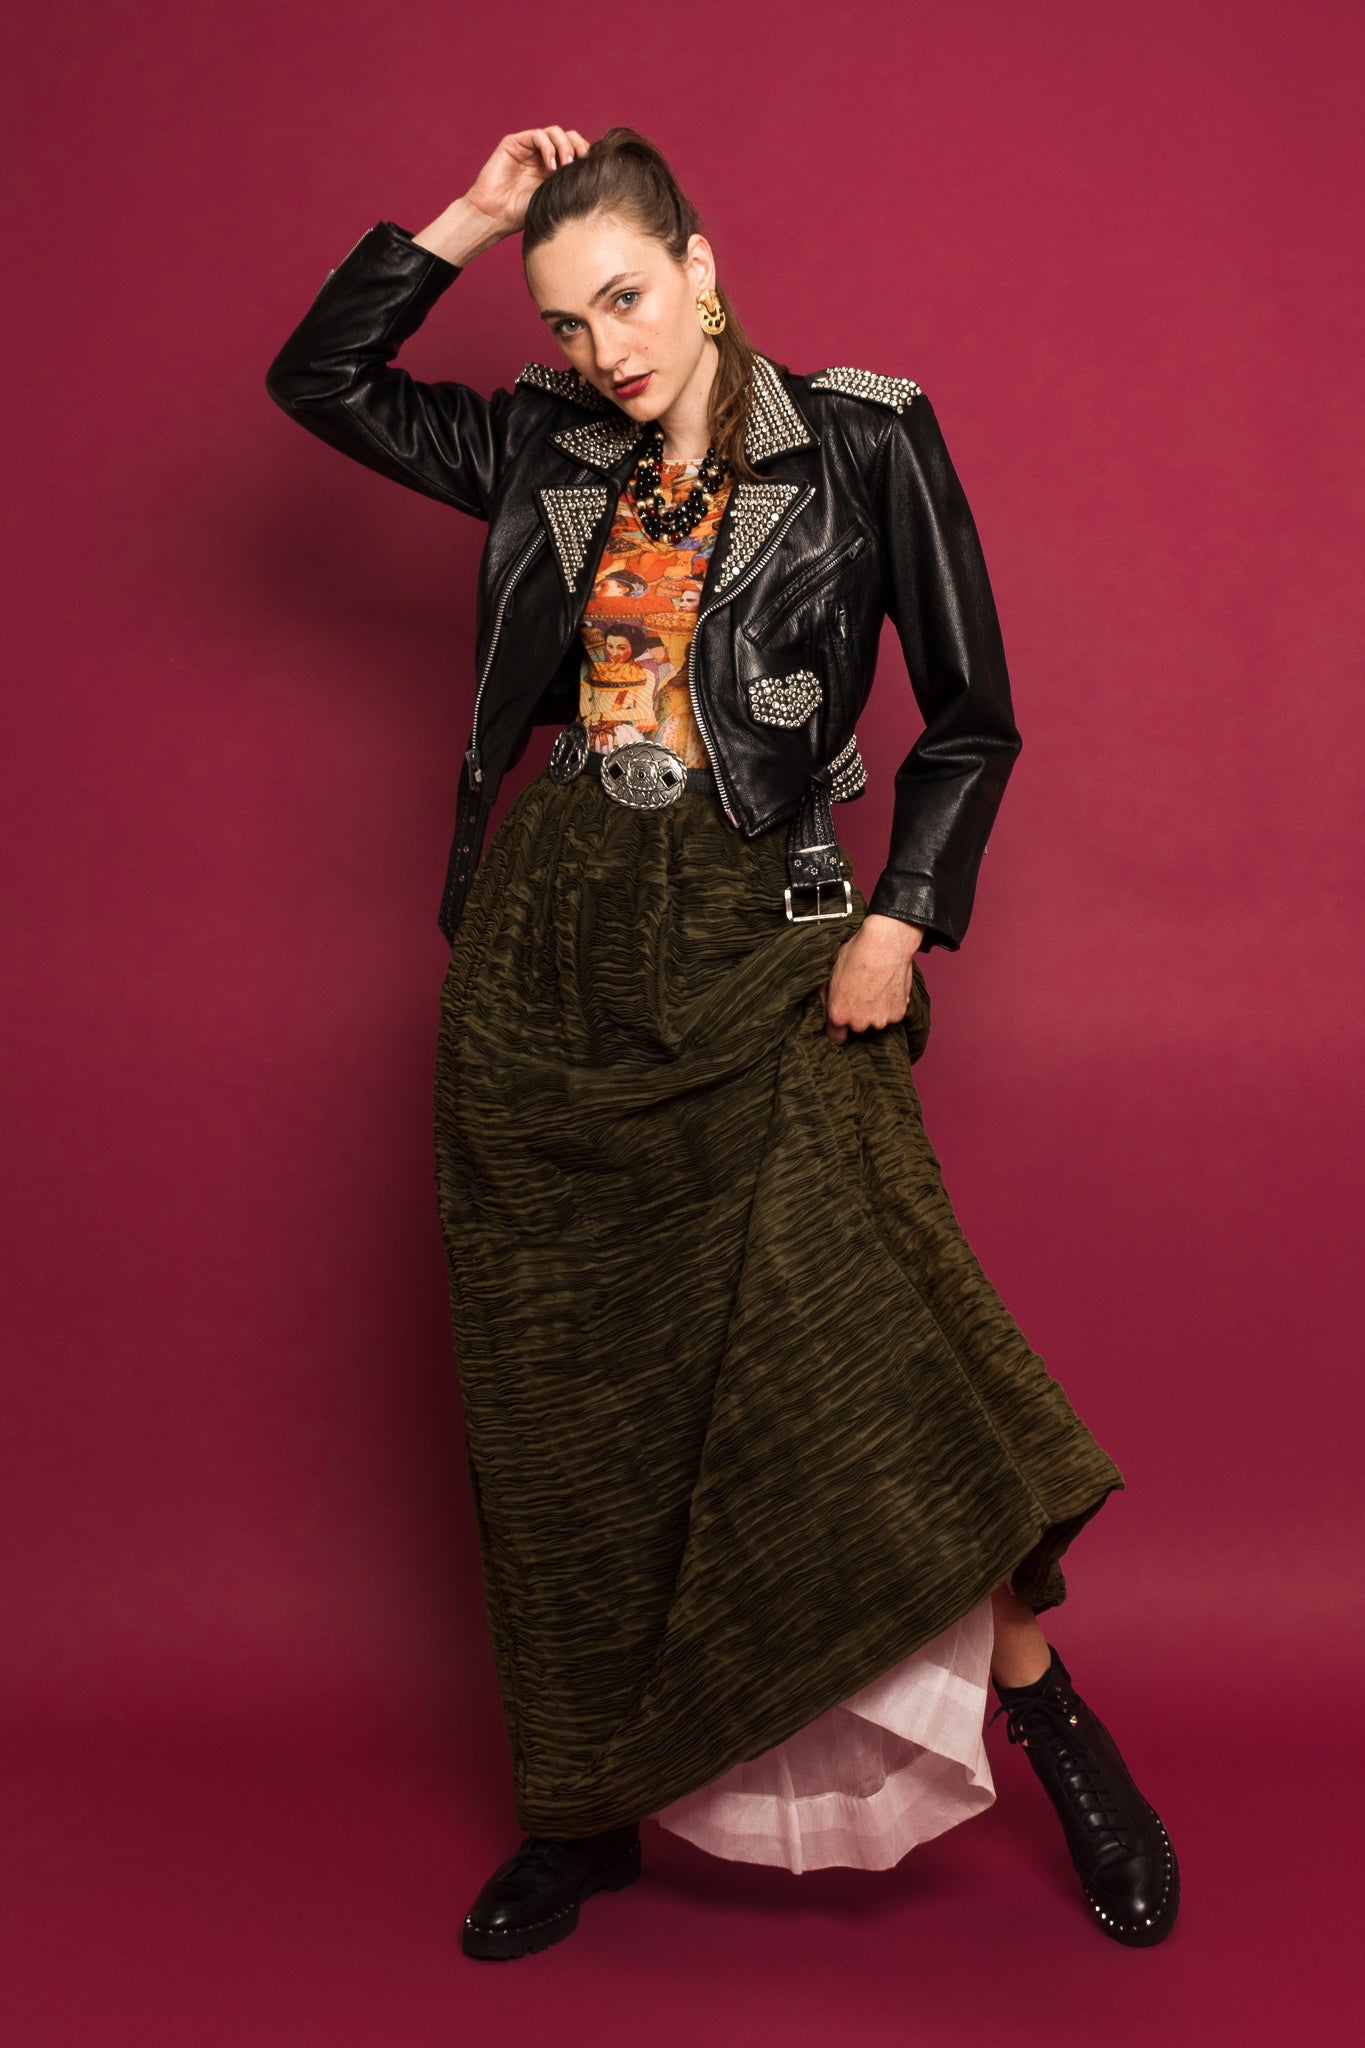 Model Emily in LA Roxx Jacket & Sybil Connolly Skirt @ Recess LA